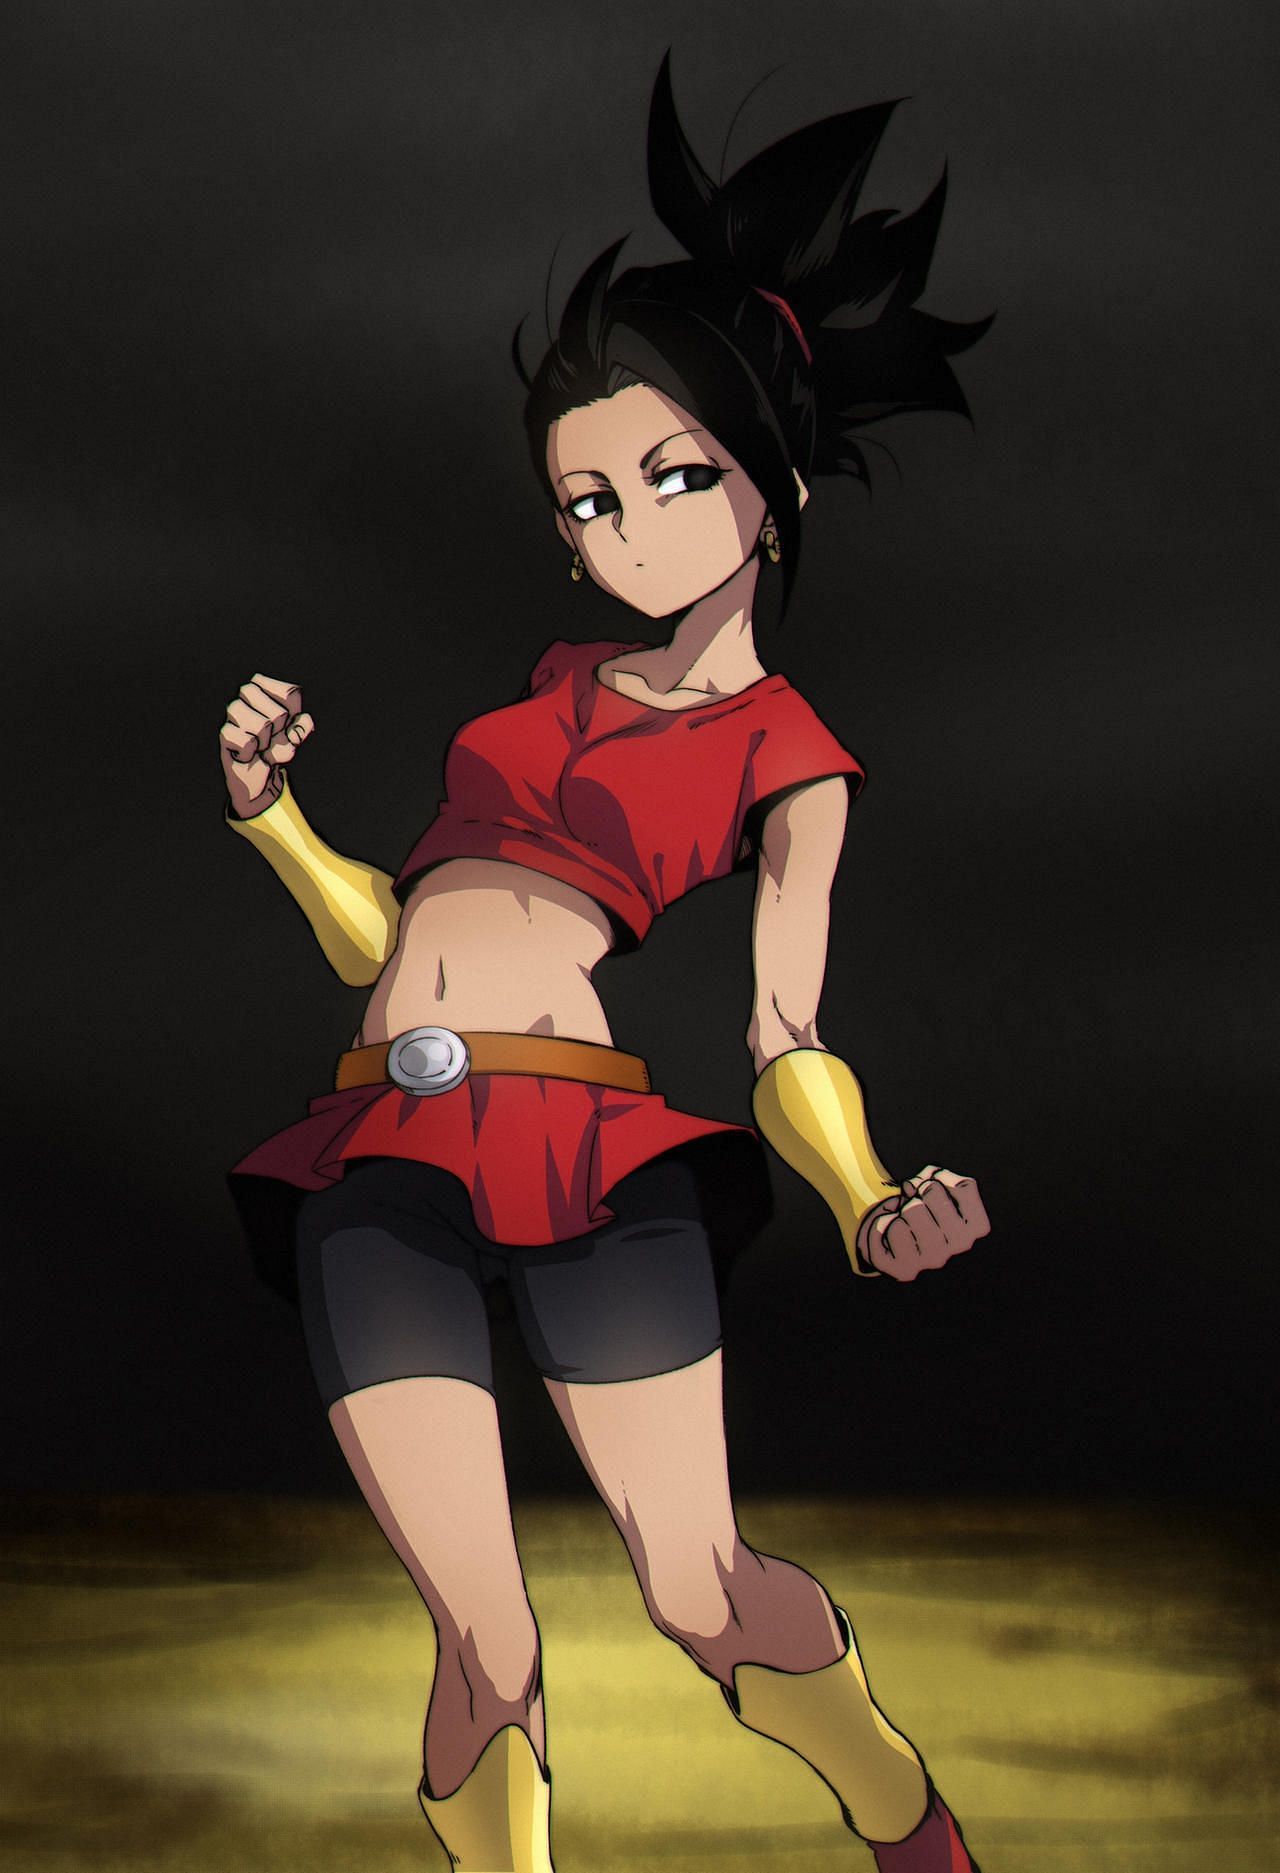 Fanart of Kale as she appears in the 'Super' anime (Image via BlazhArts/DeviantArt)